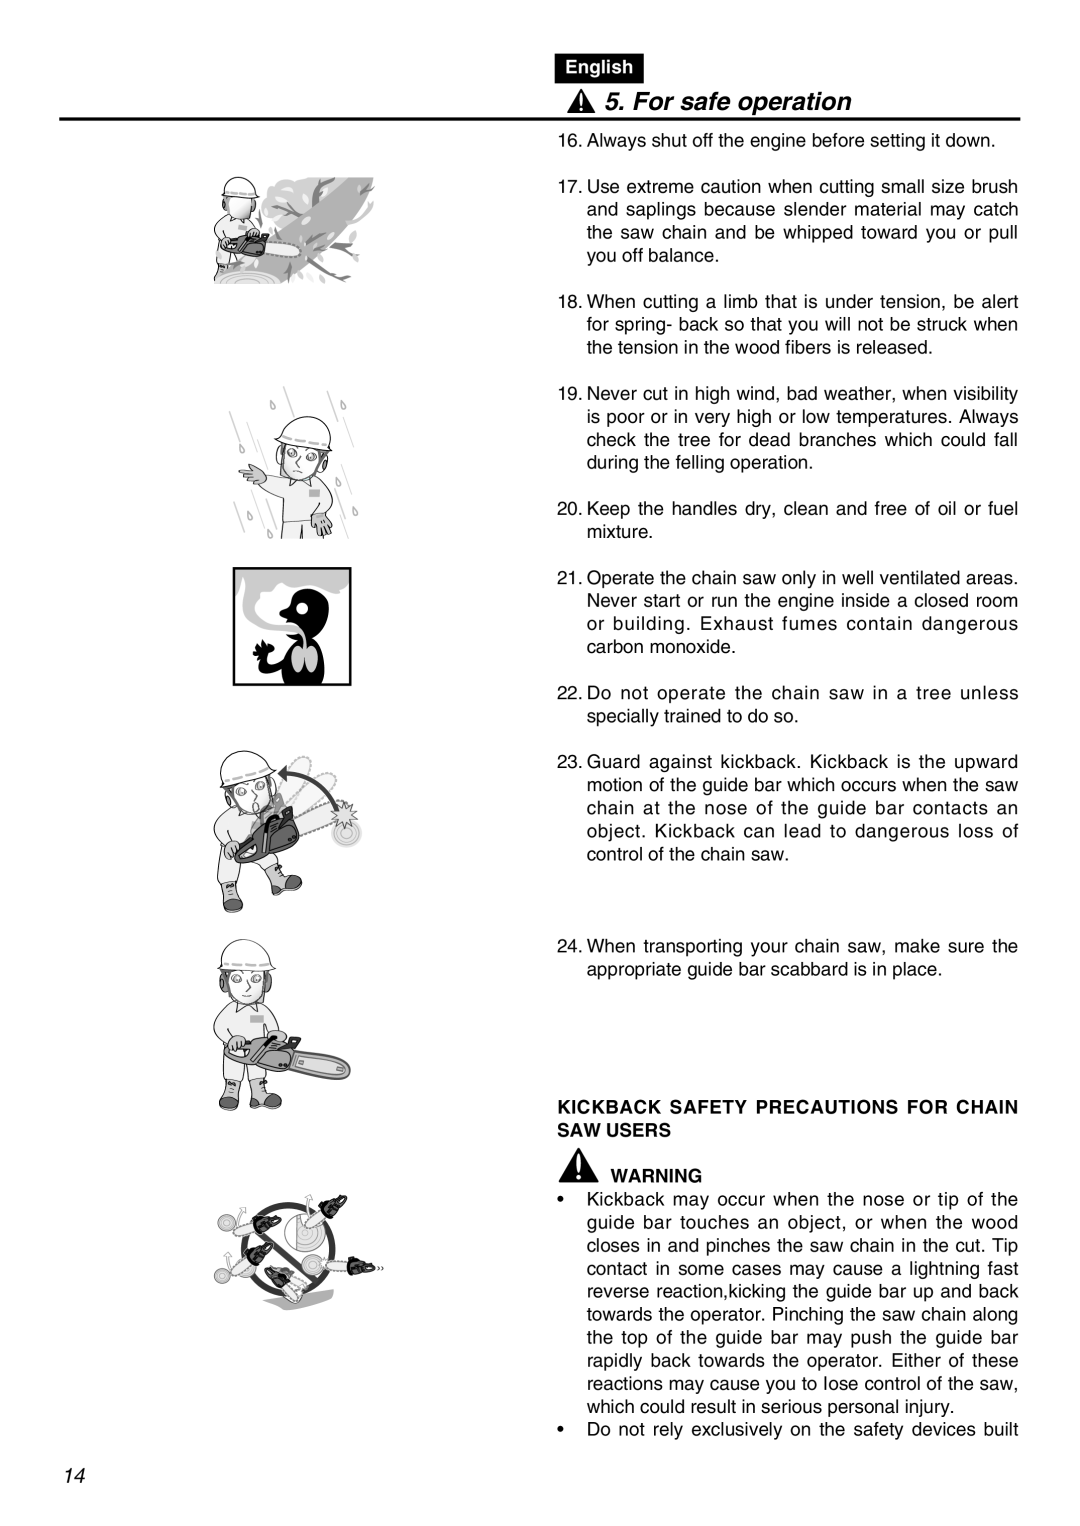 Zenoah G5000AVS manual For safe operation, English, Kickback Safety Precautions For Chain Saw Users 